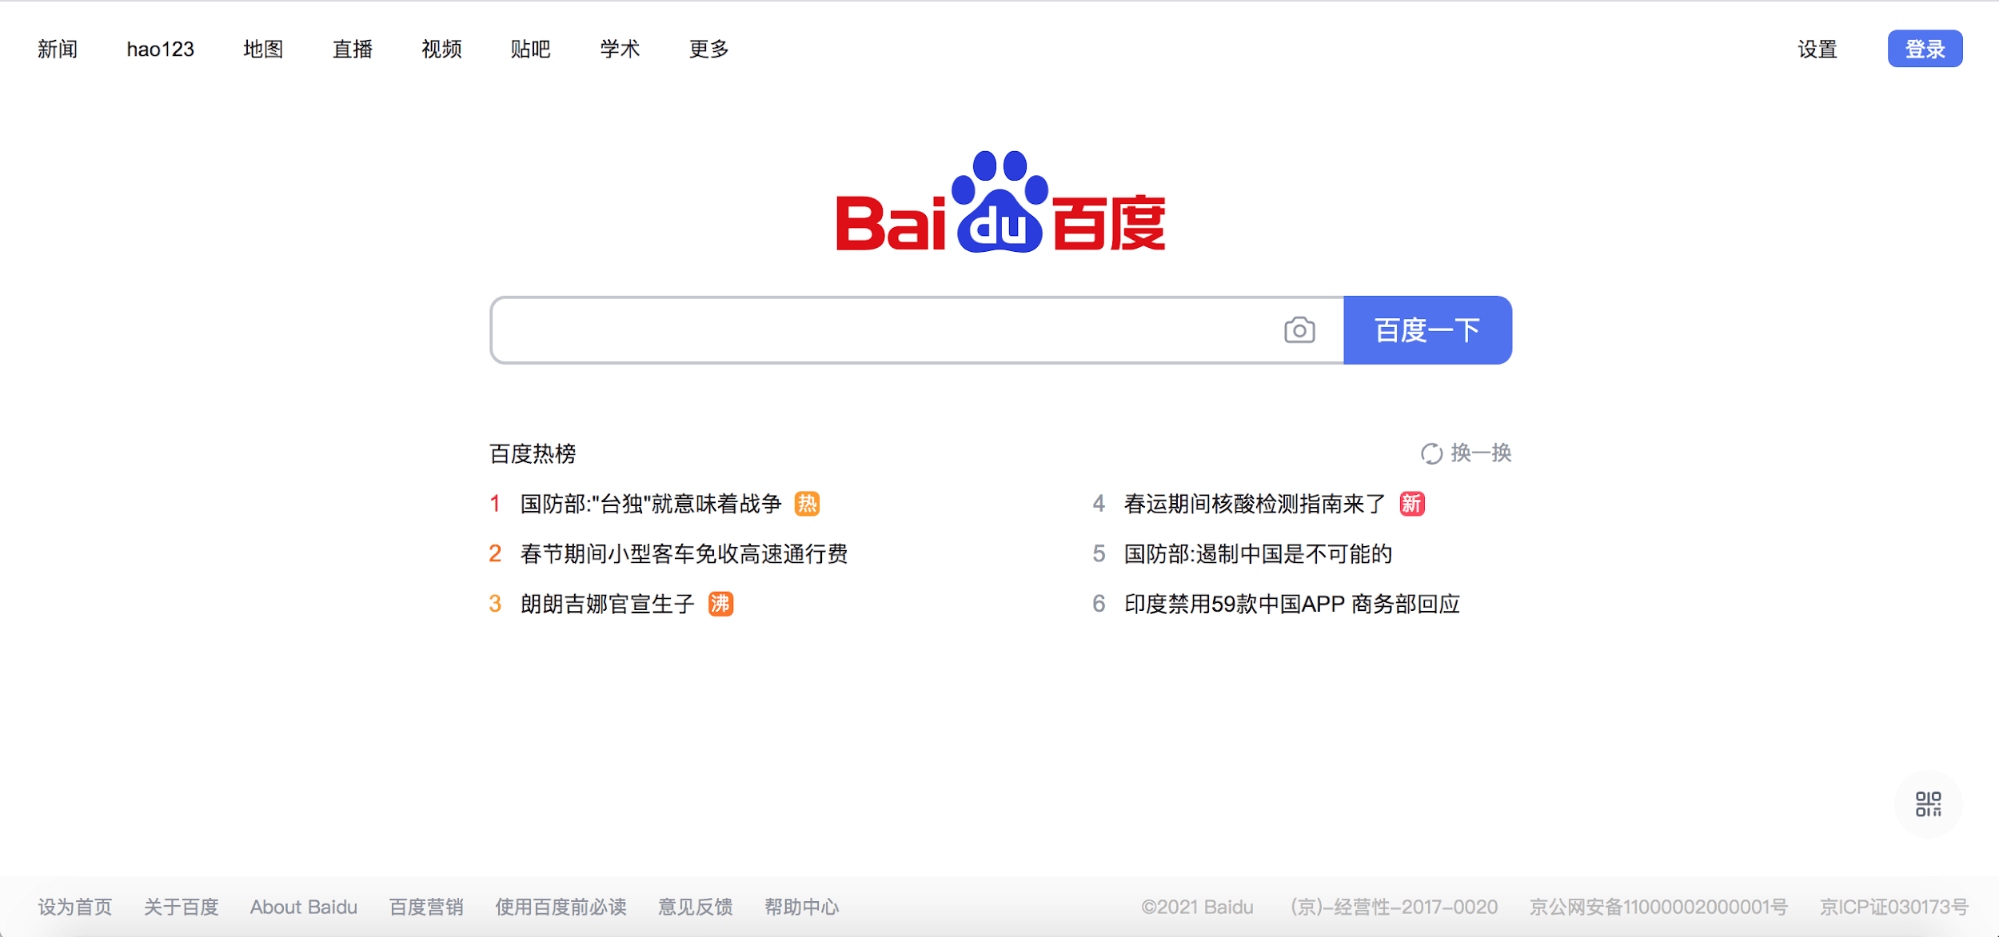 Contextual advertising in Baidu.